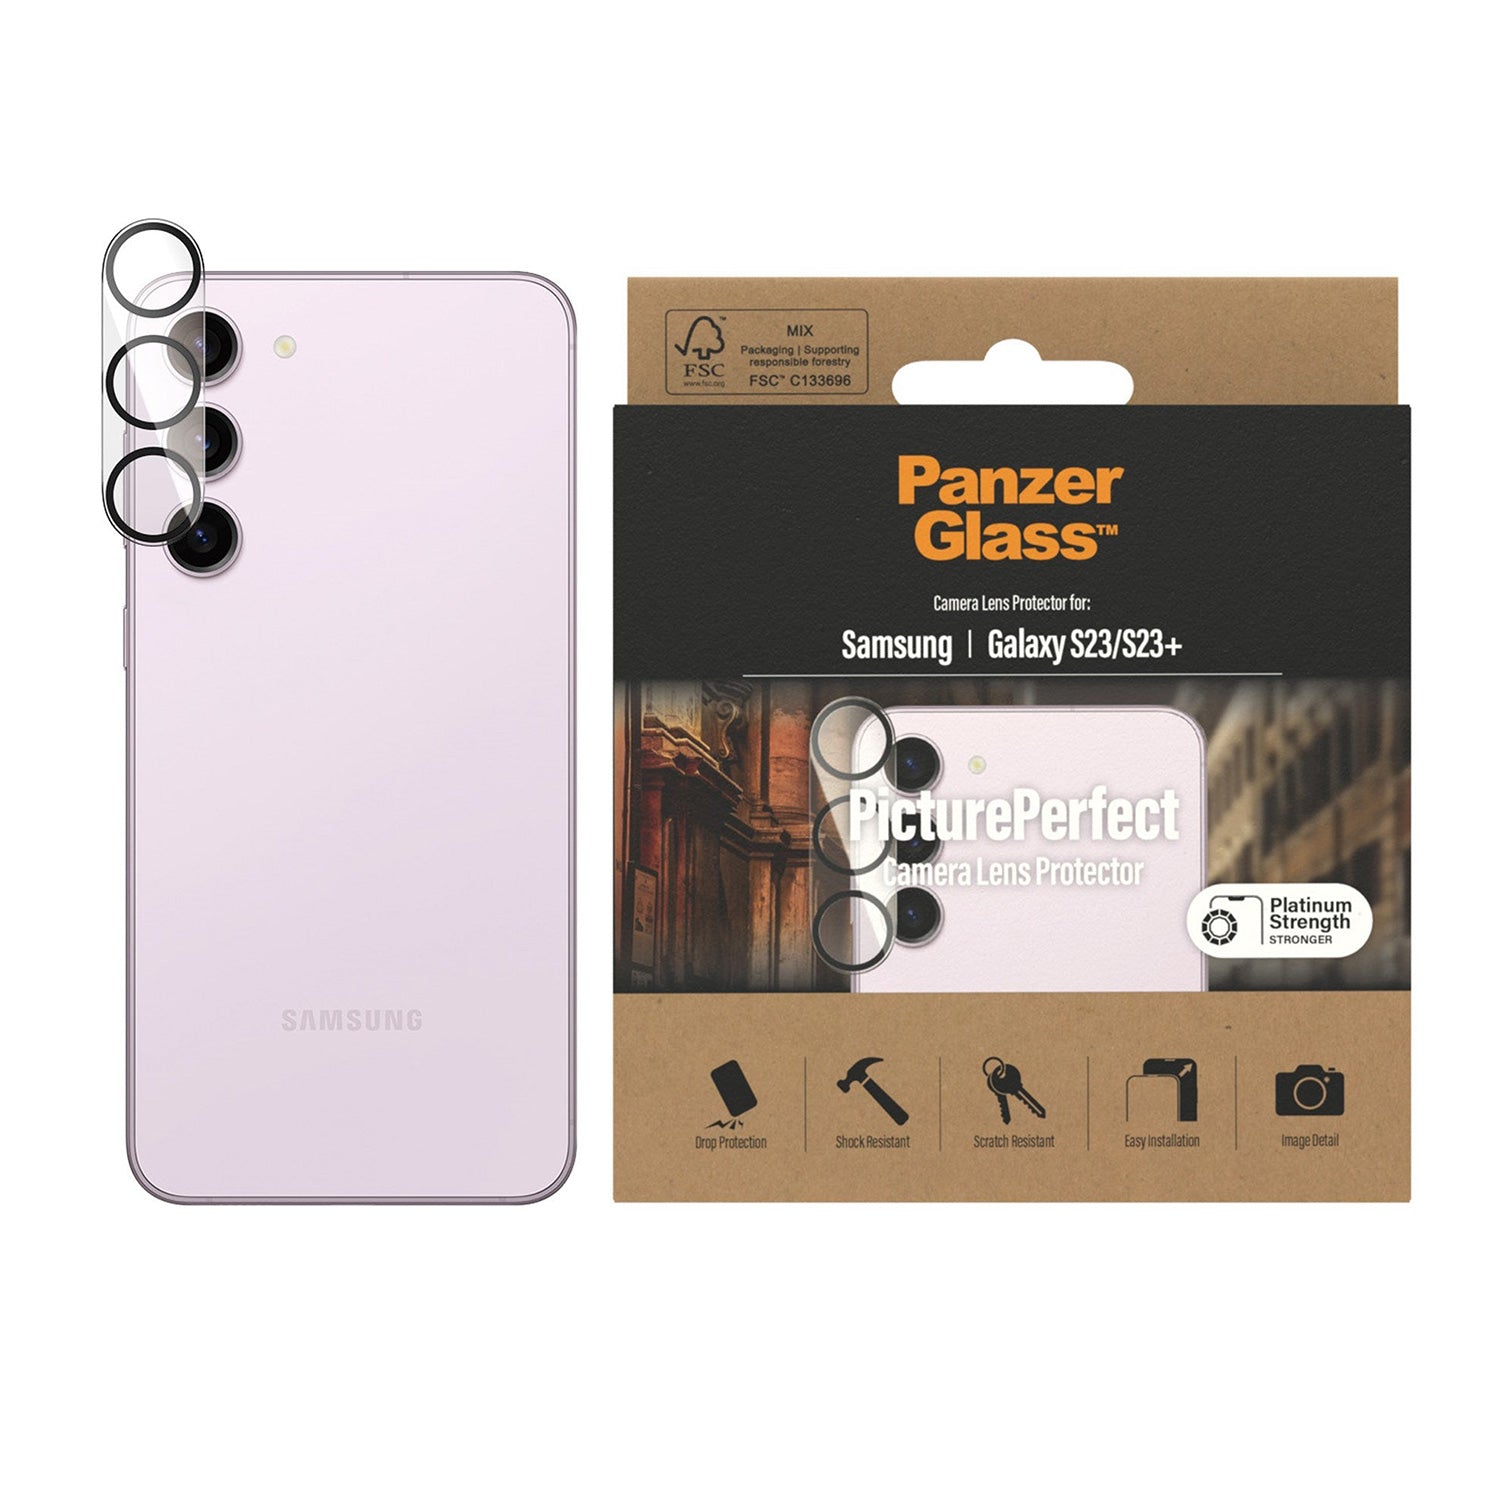 PanzerGlass Samsung Galaxy S23 PicturePerfect Camera Protector